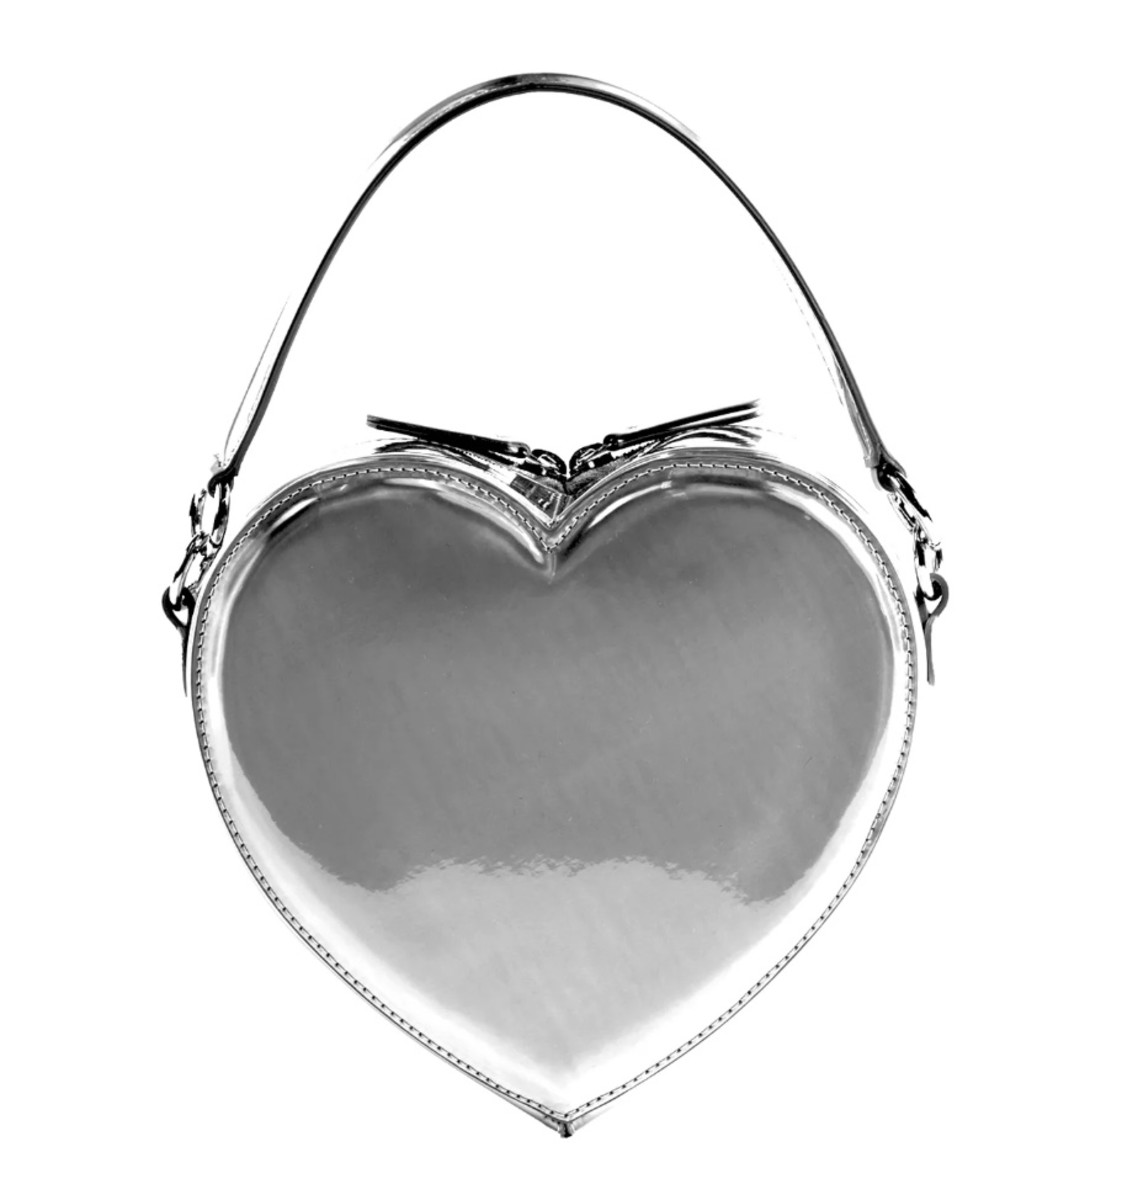 Amriti the Heart Shaped Bag - Tryxus Design